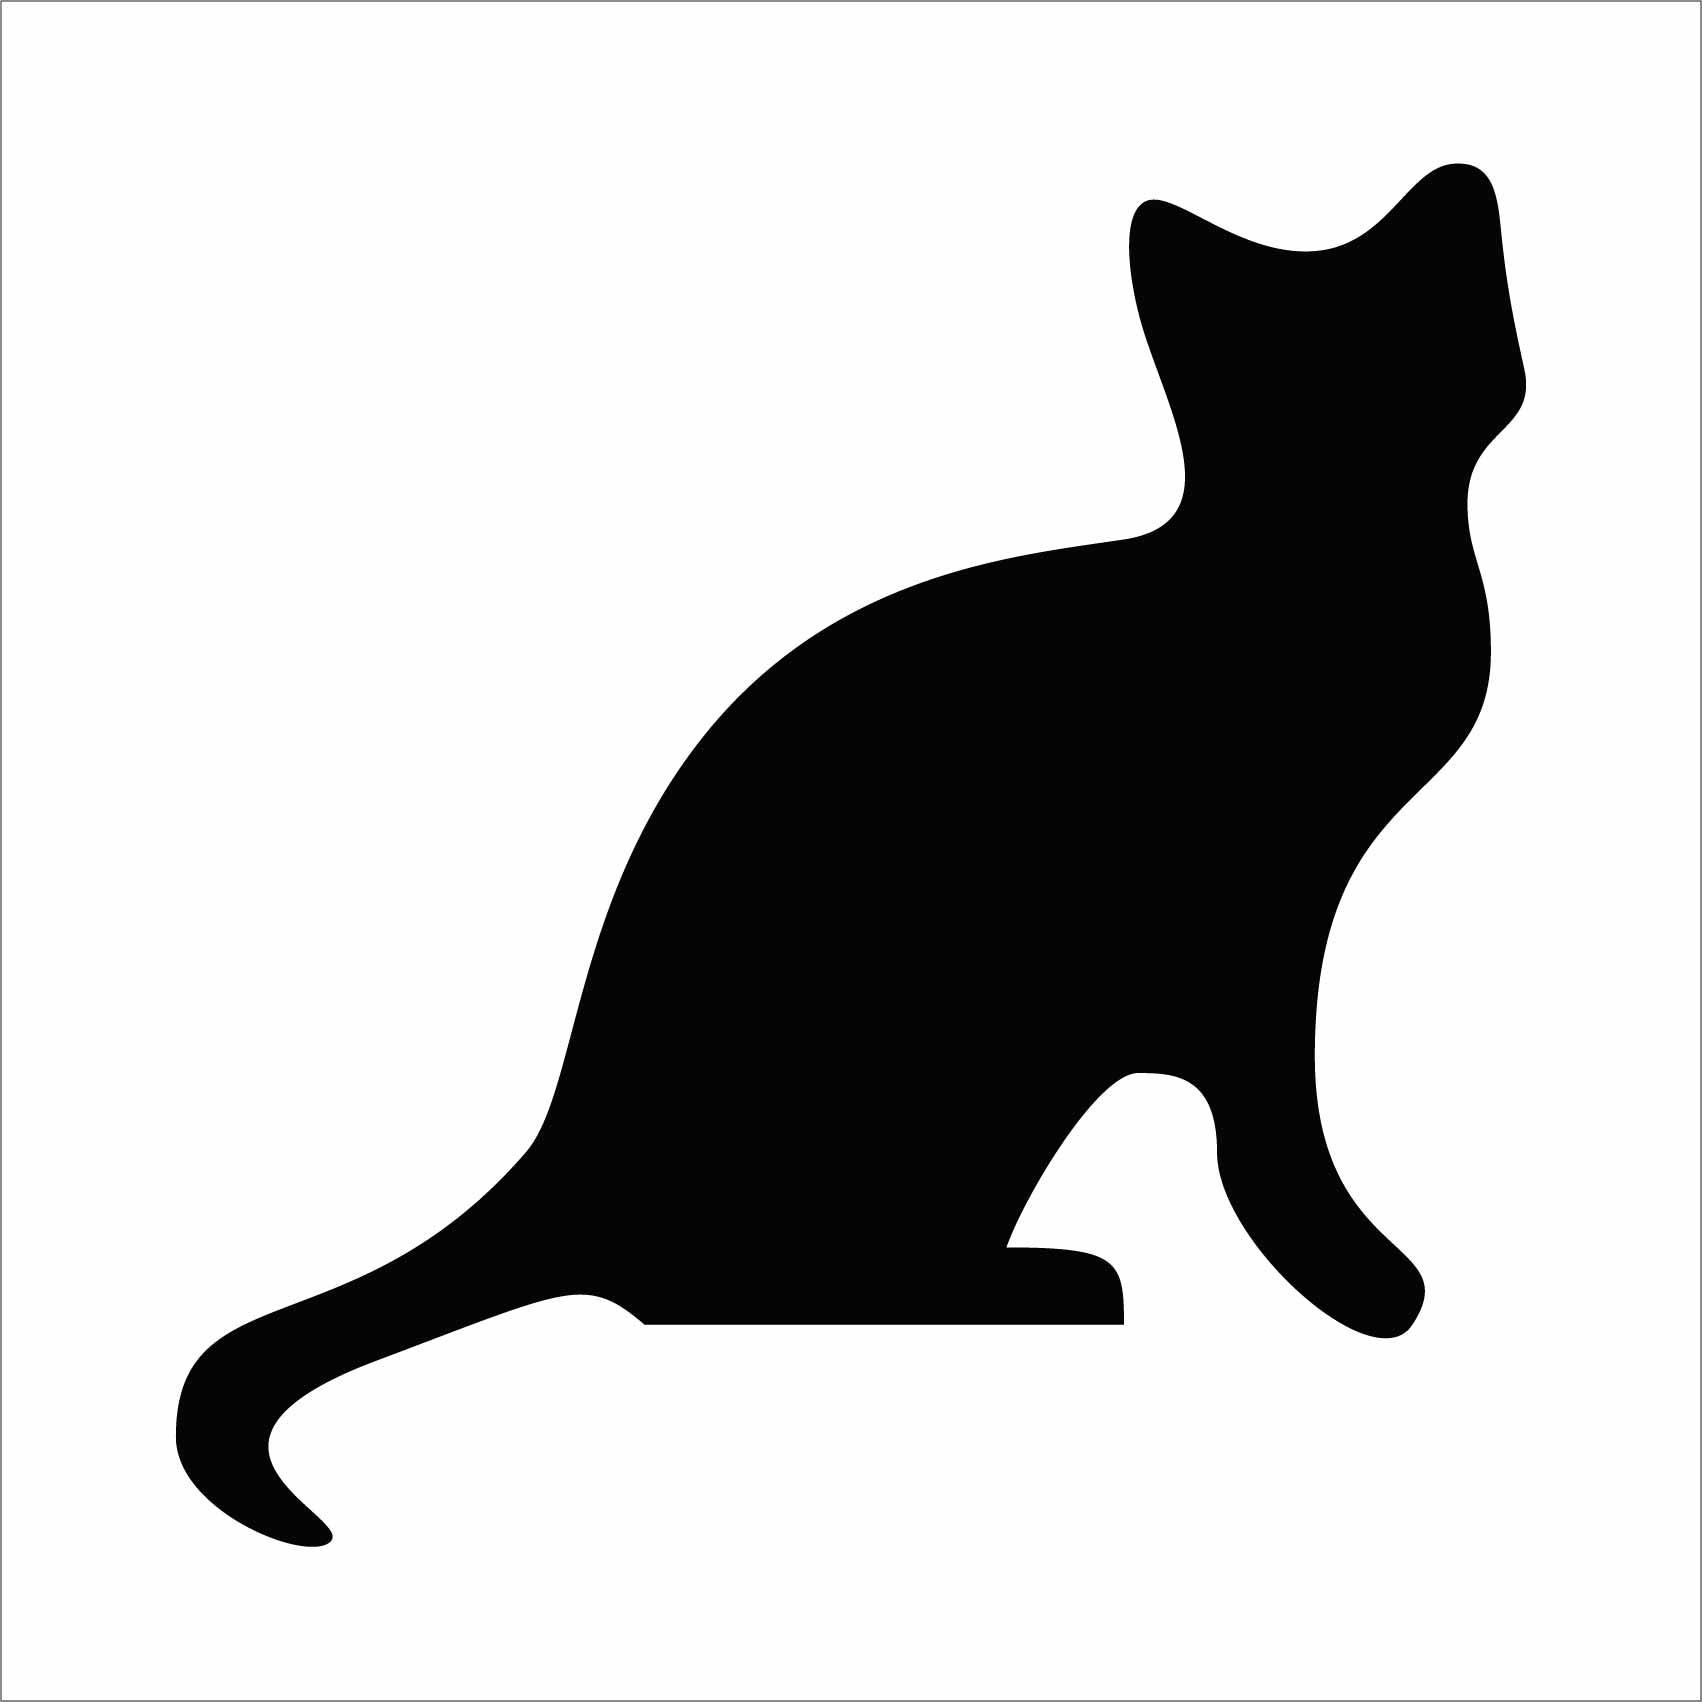 Stickers muraux pour les enfants - Sticker Manga fille-chaton